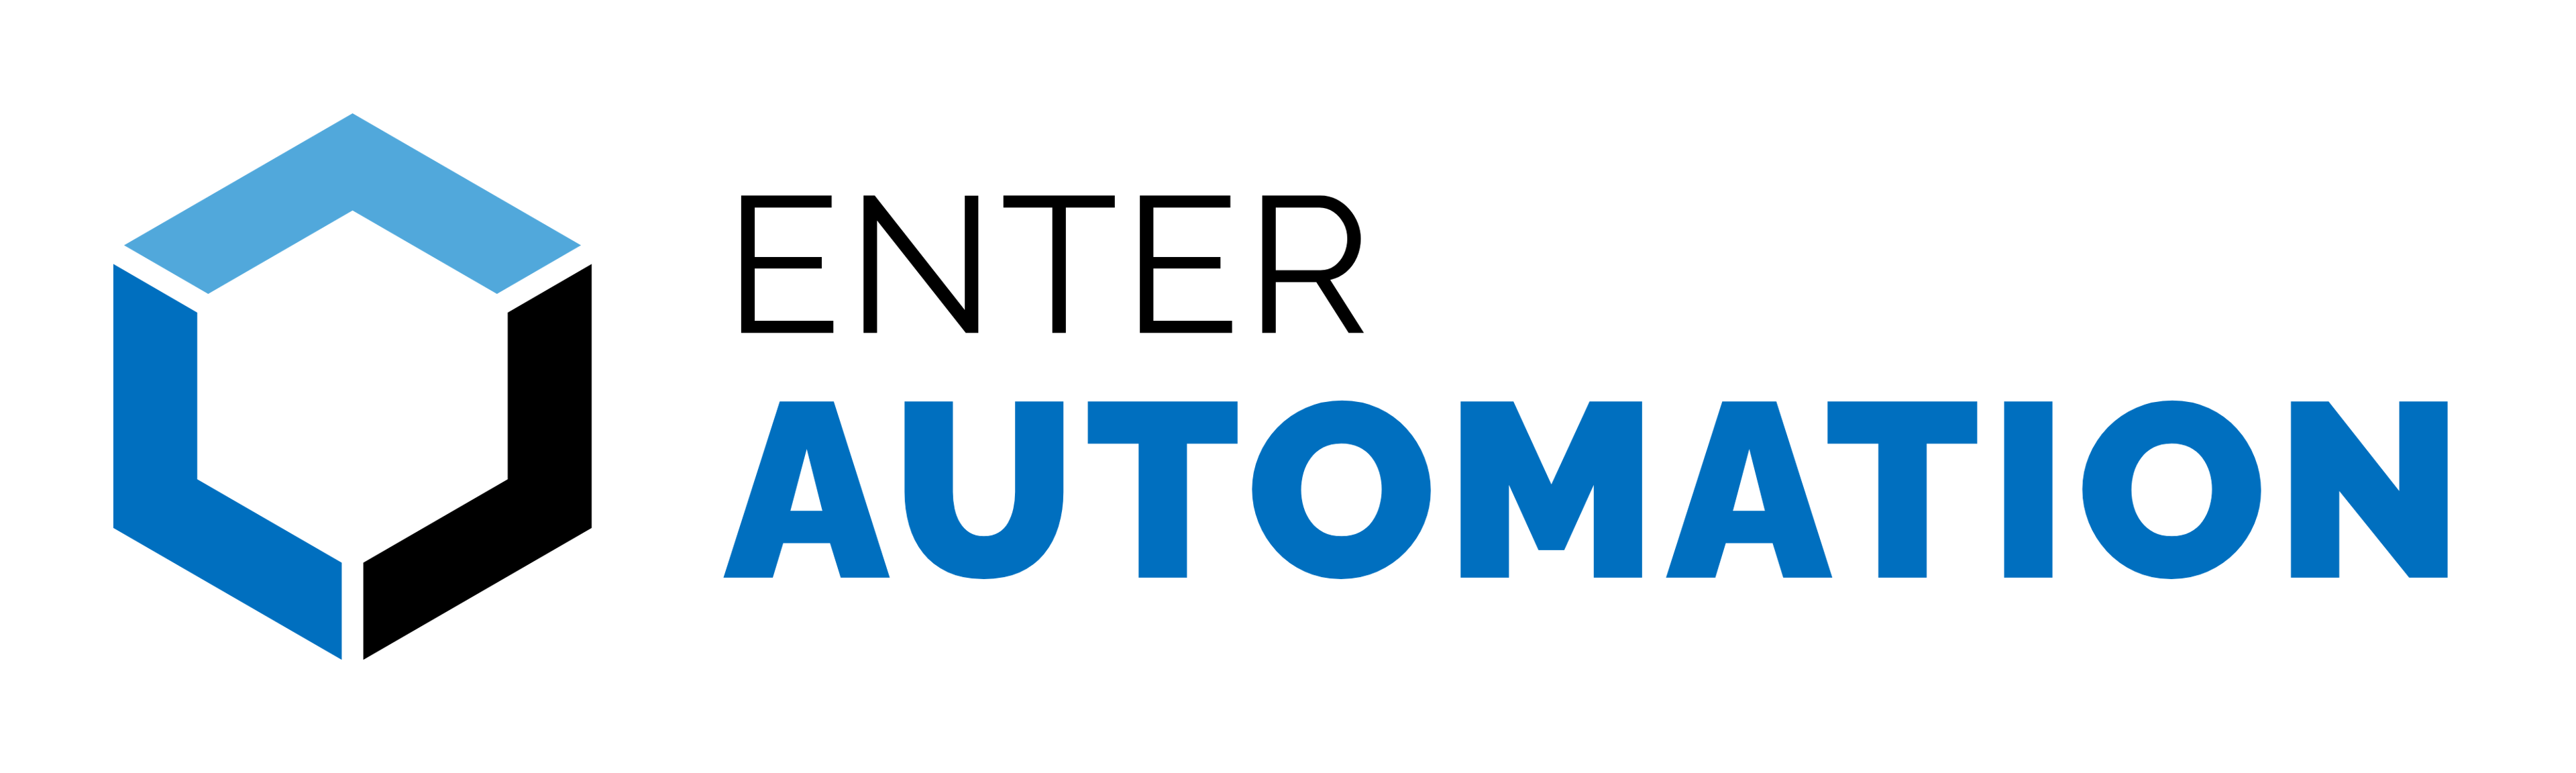 Enter Automation logo